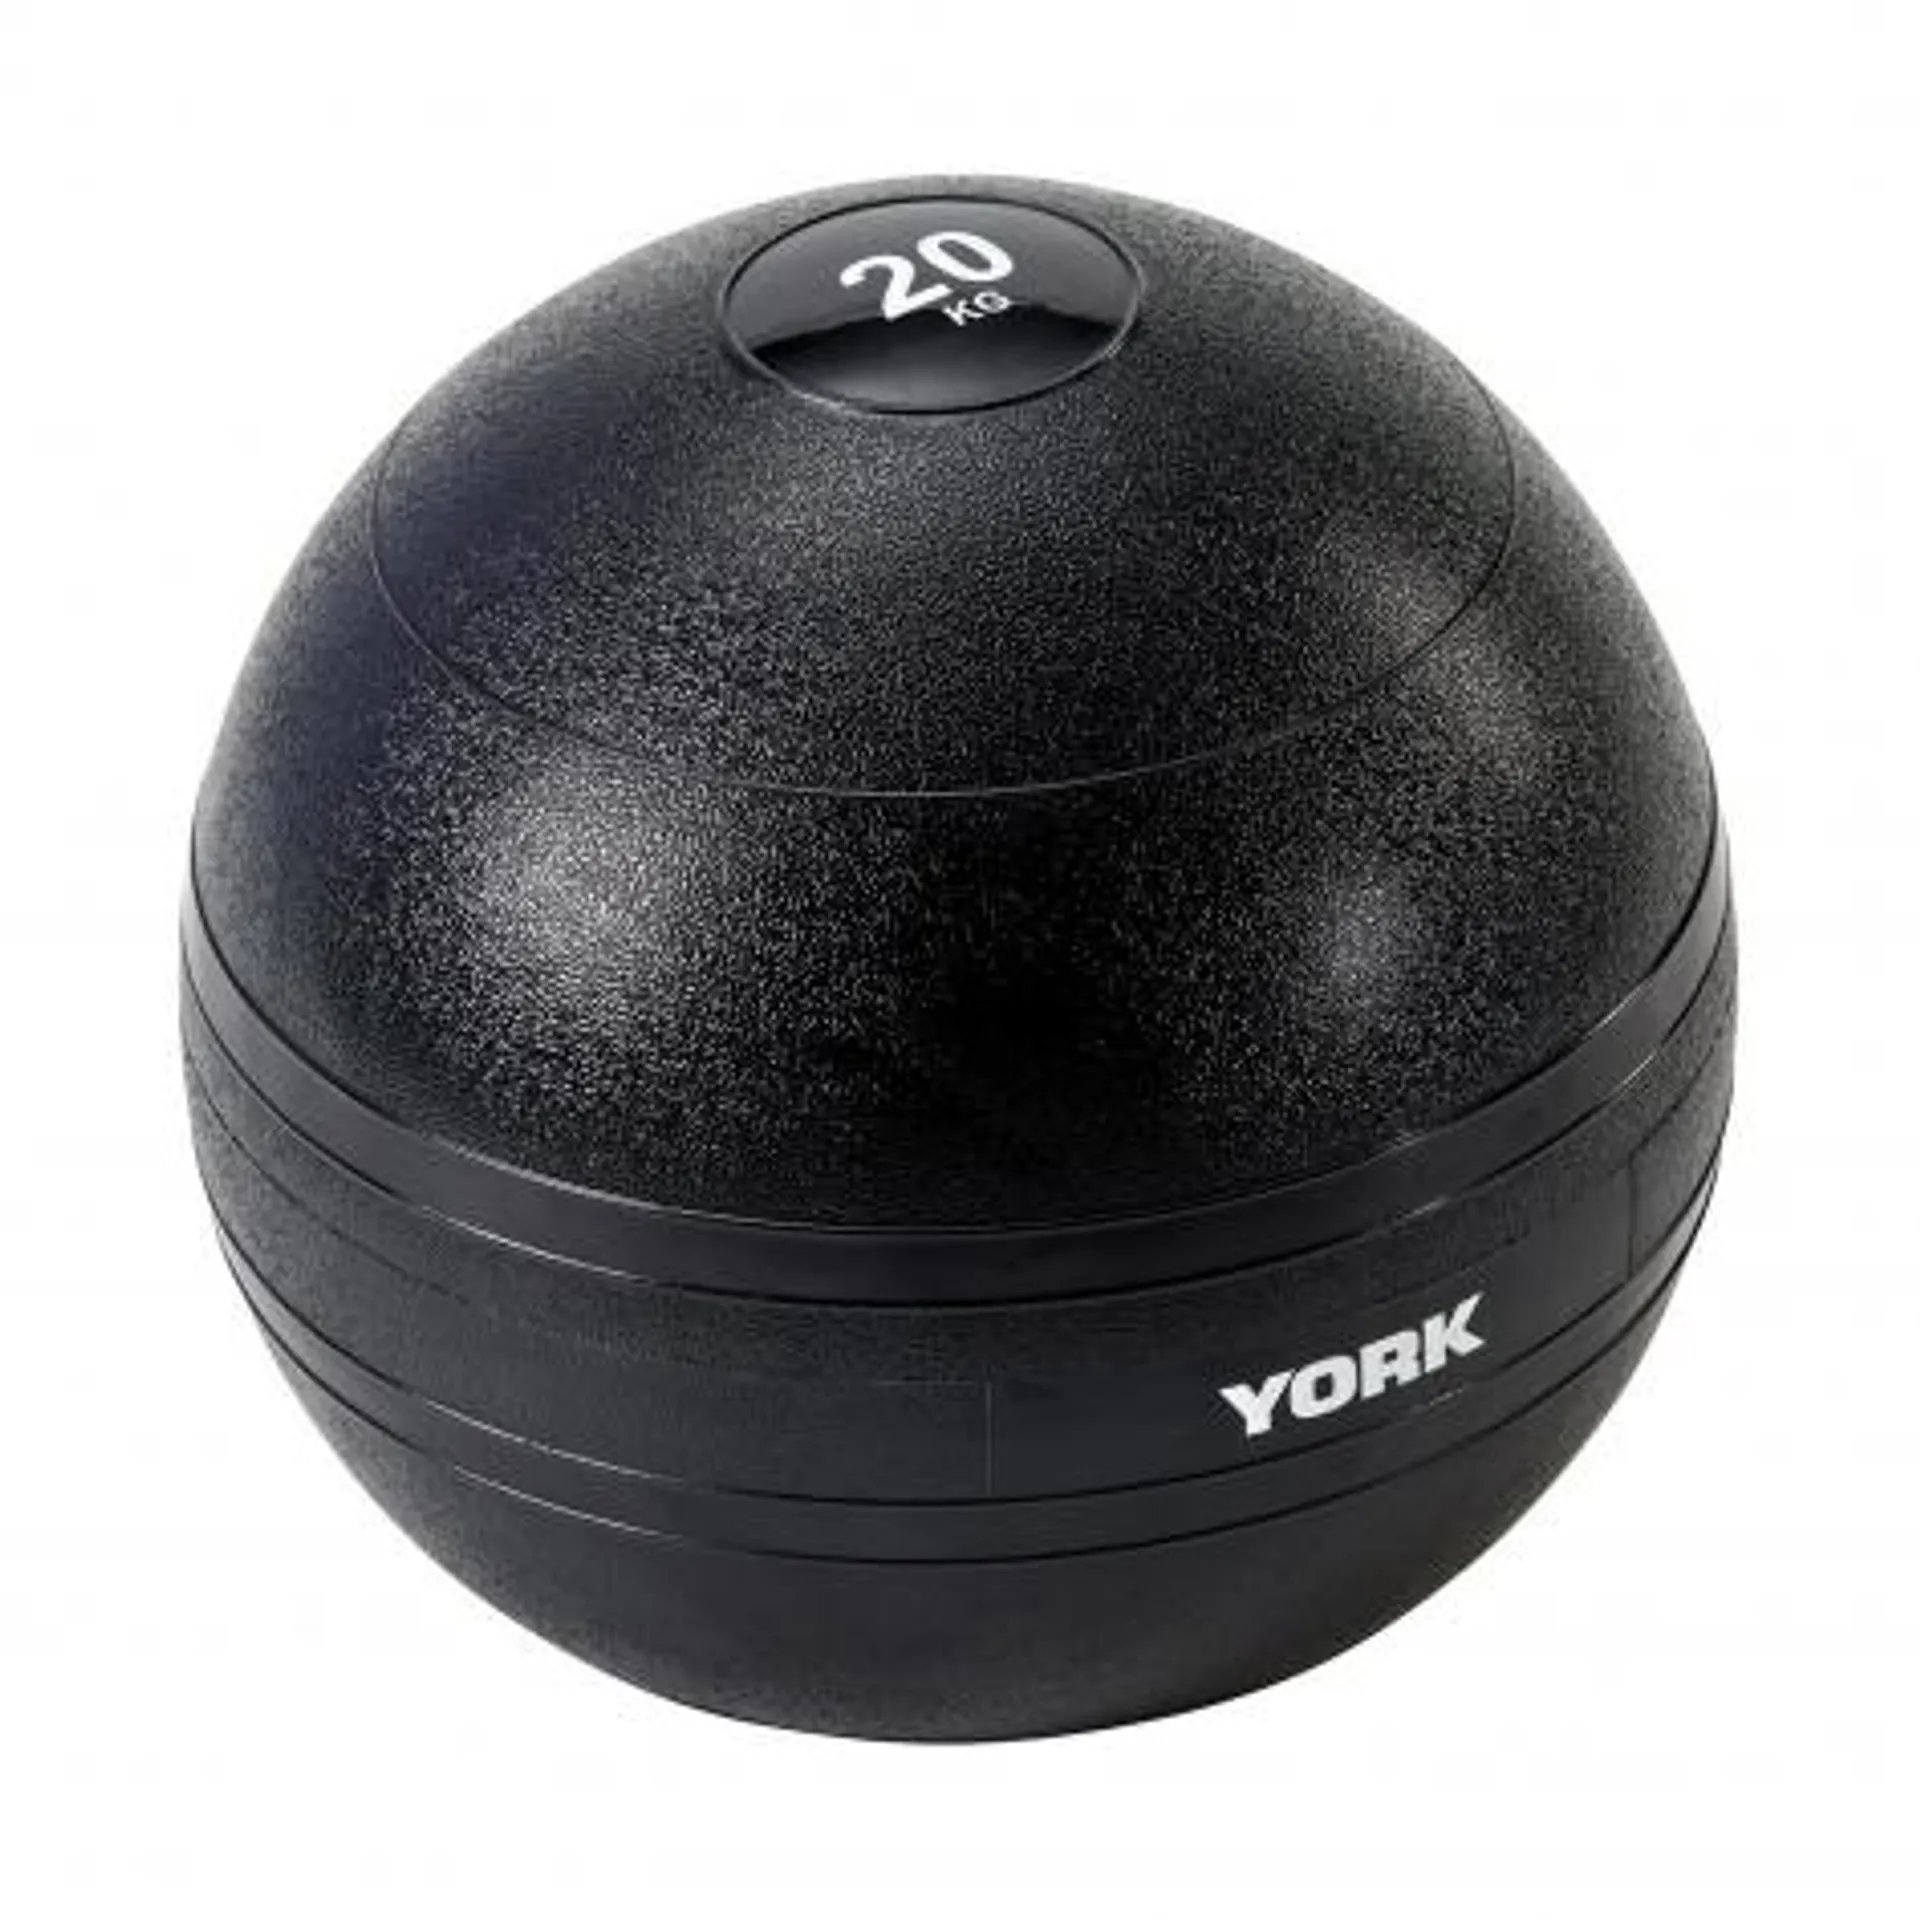 York 20kg Slam Ball - Northampton Ex-Display Product